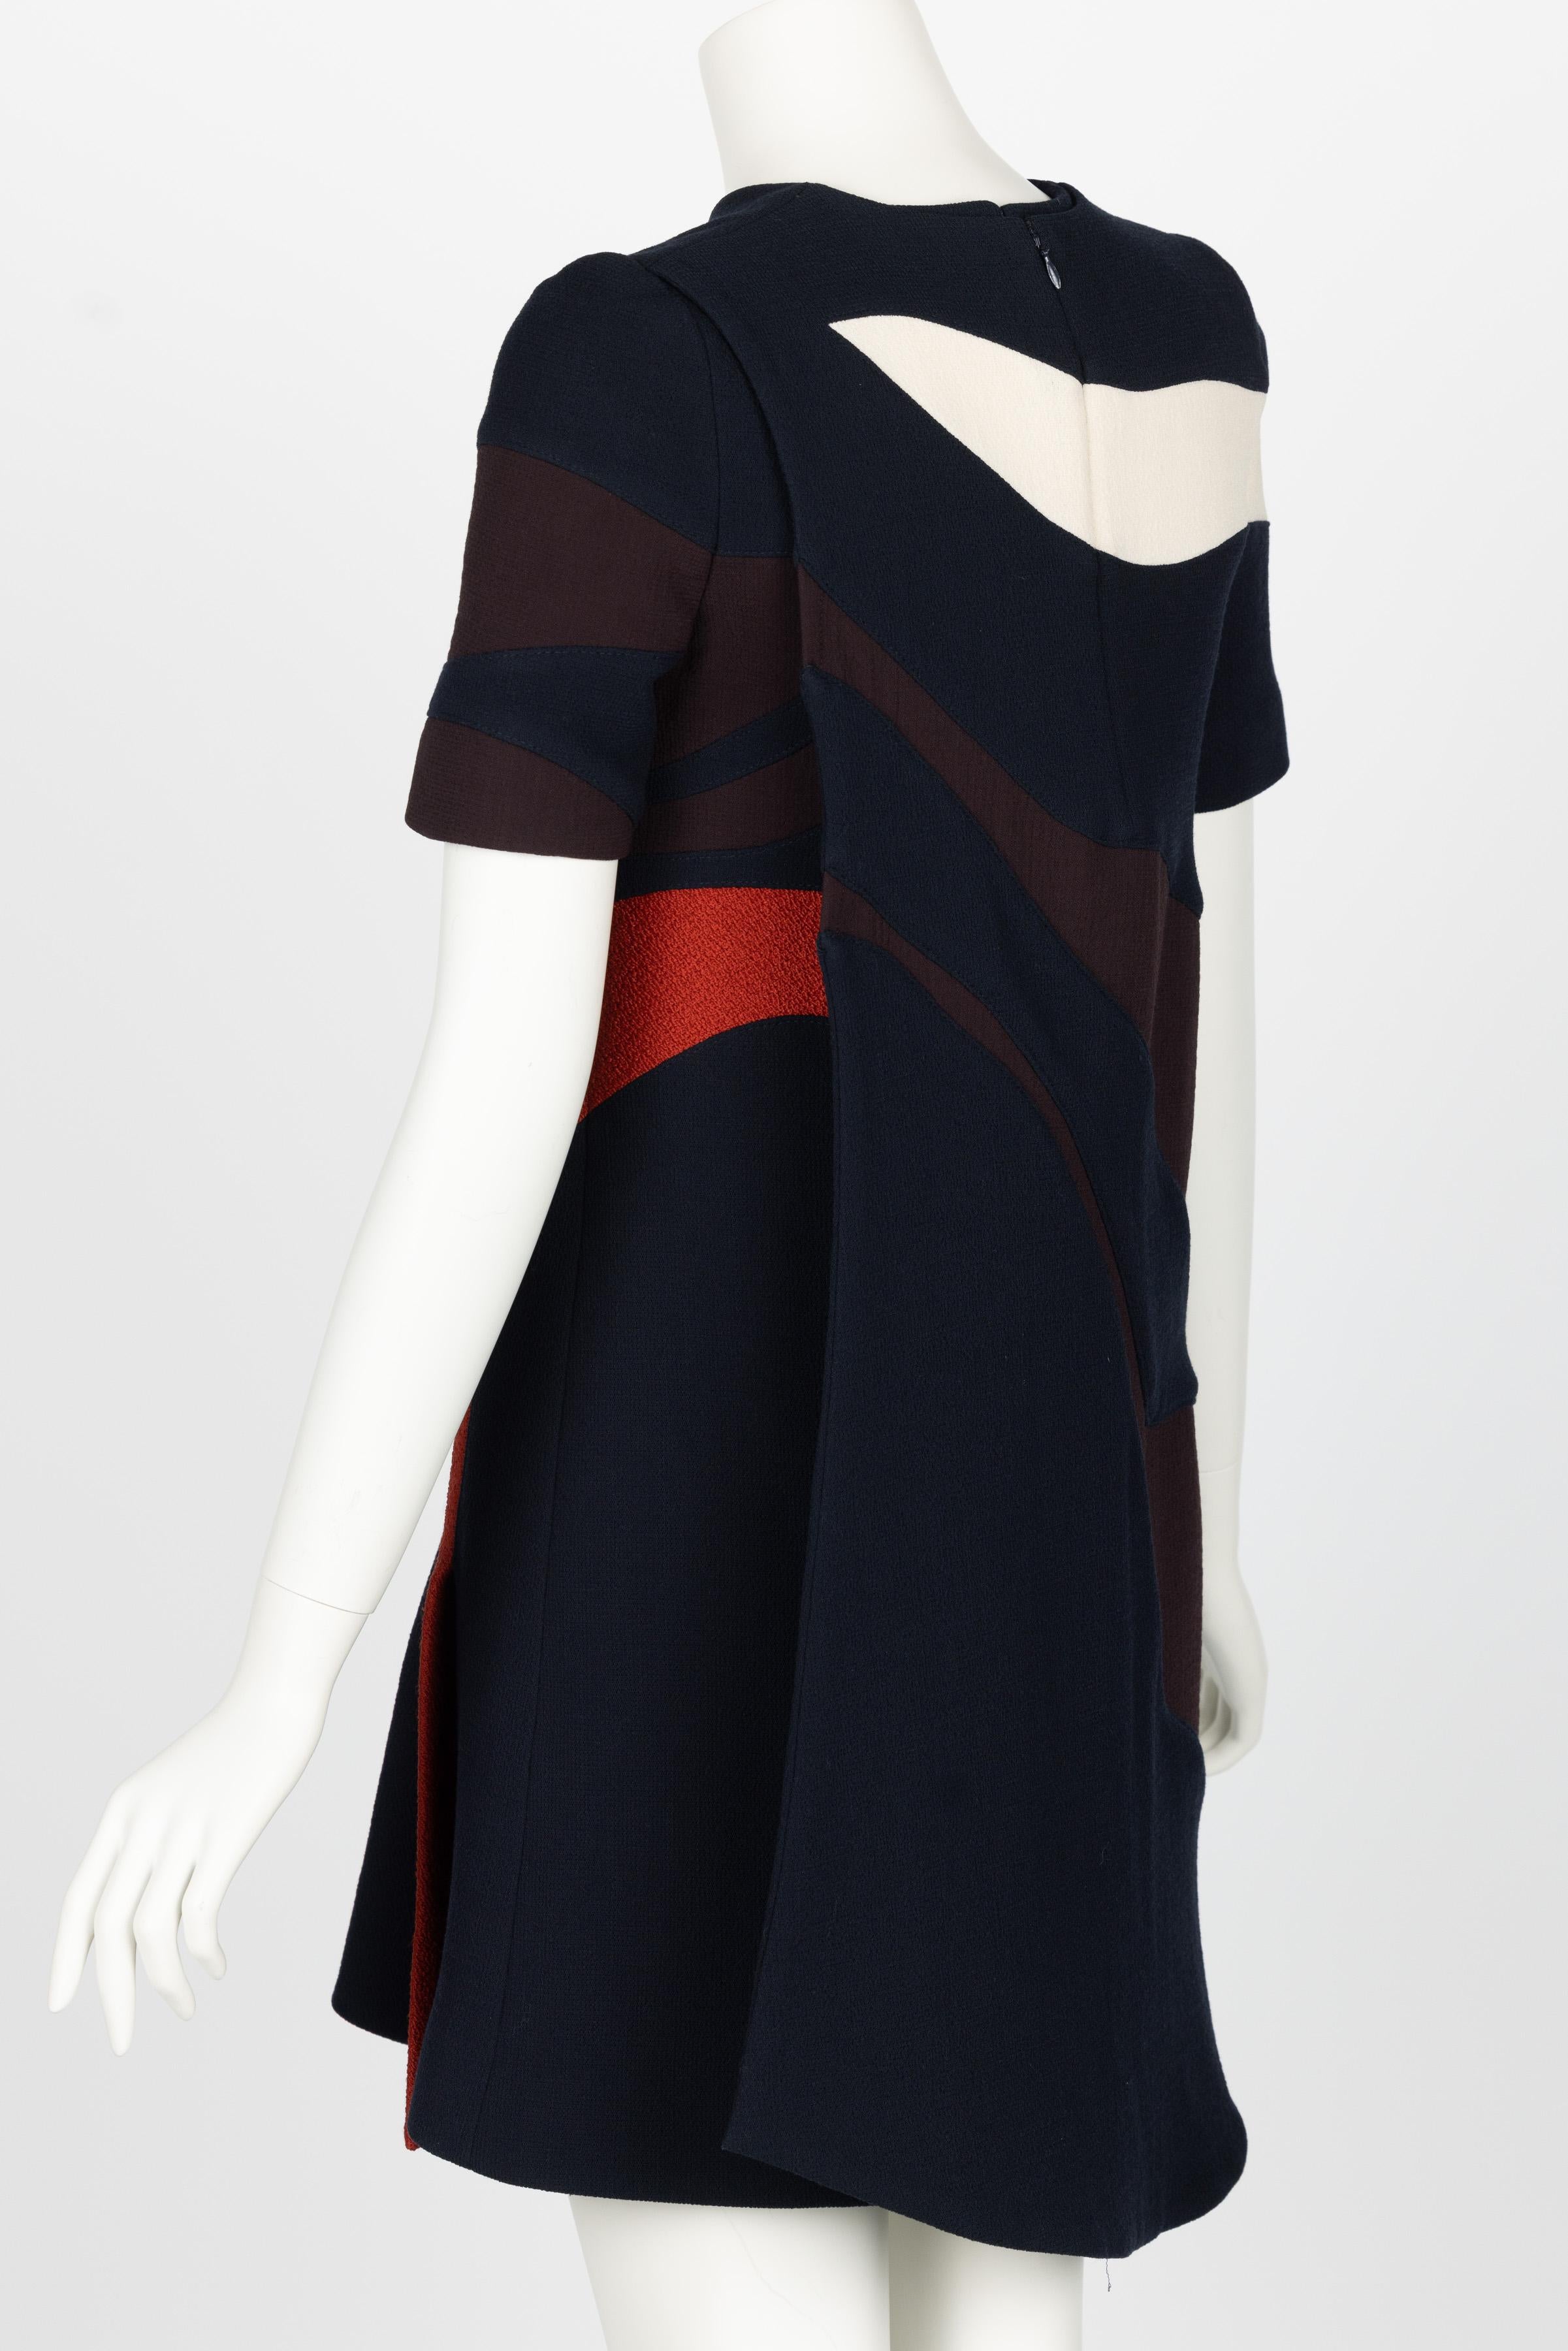 Christian Dior Raf Simmons Abstract Stripe Dress Runway Fall 2015  2